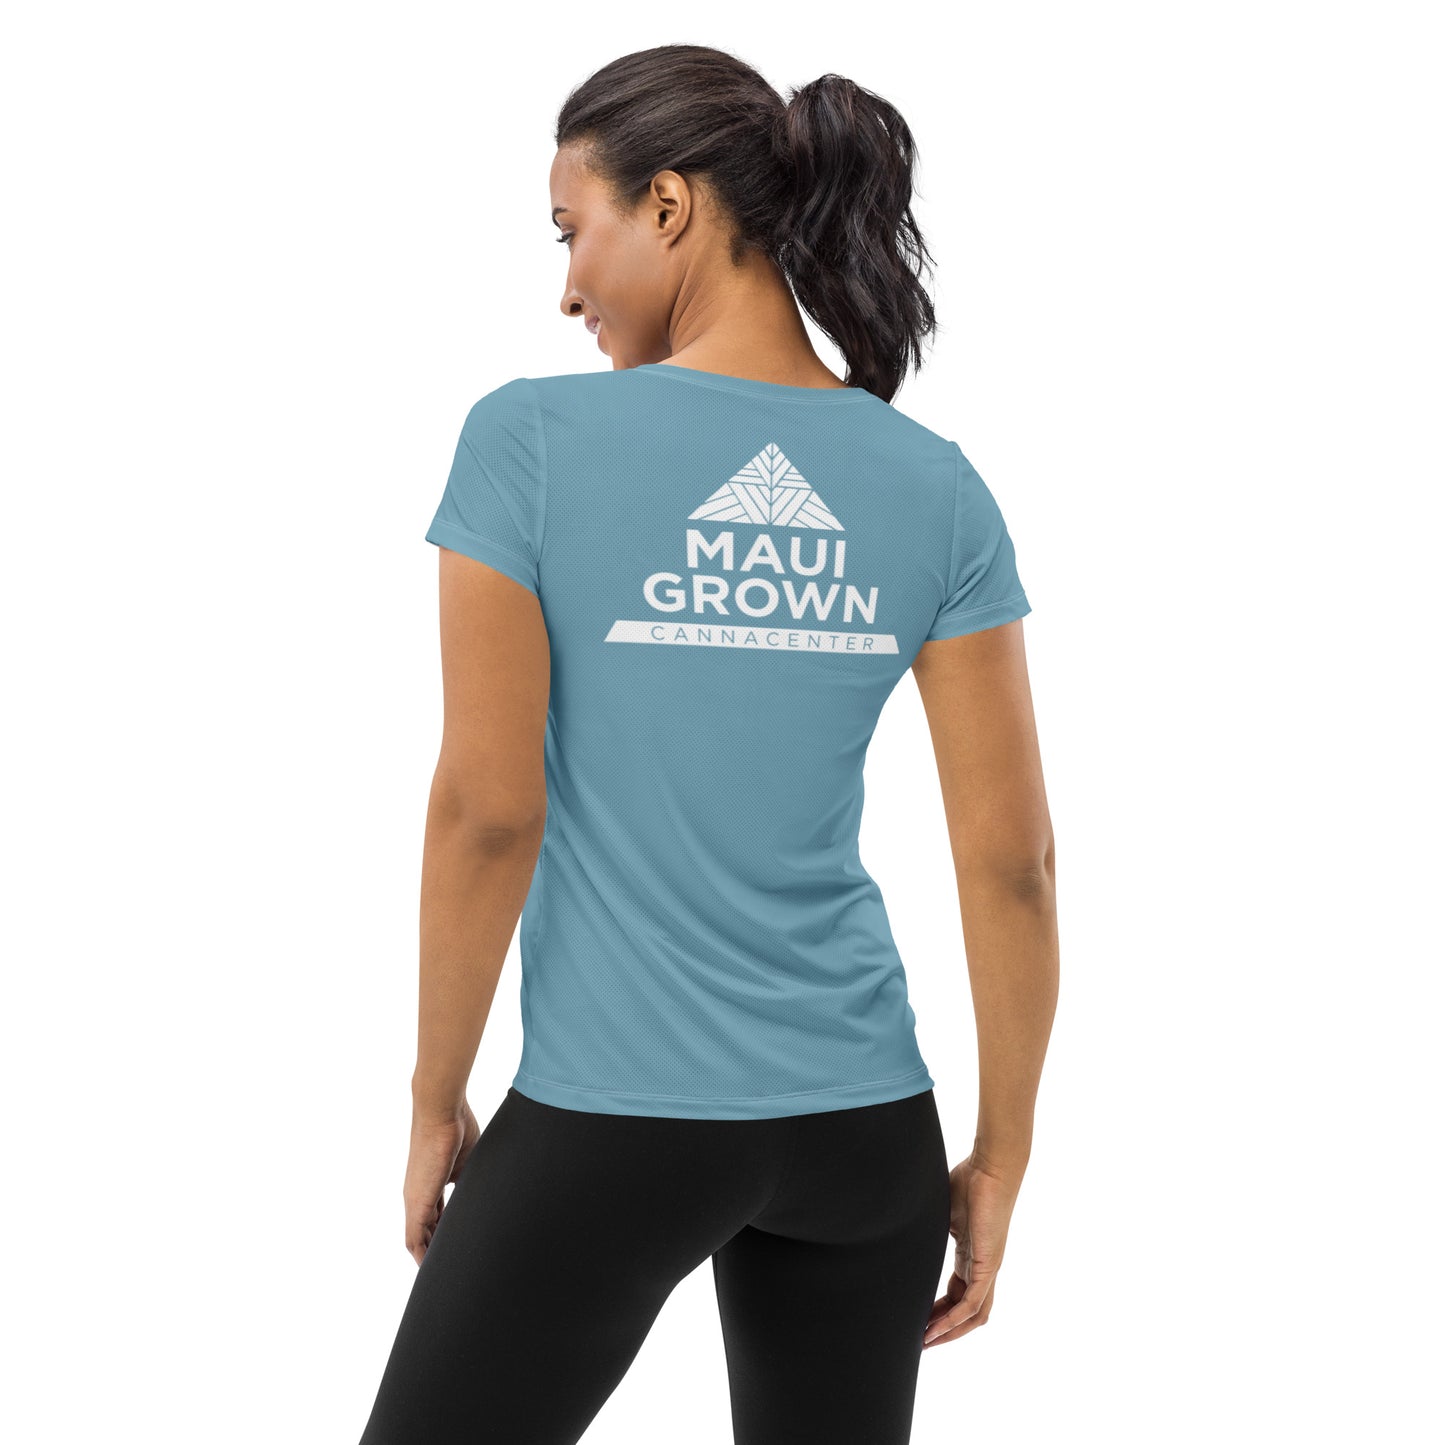 Maui Grown Cannacenter Women's Athletic T-shirt - Ocean Blue